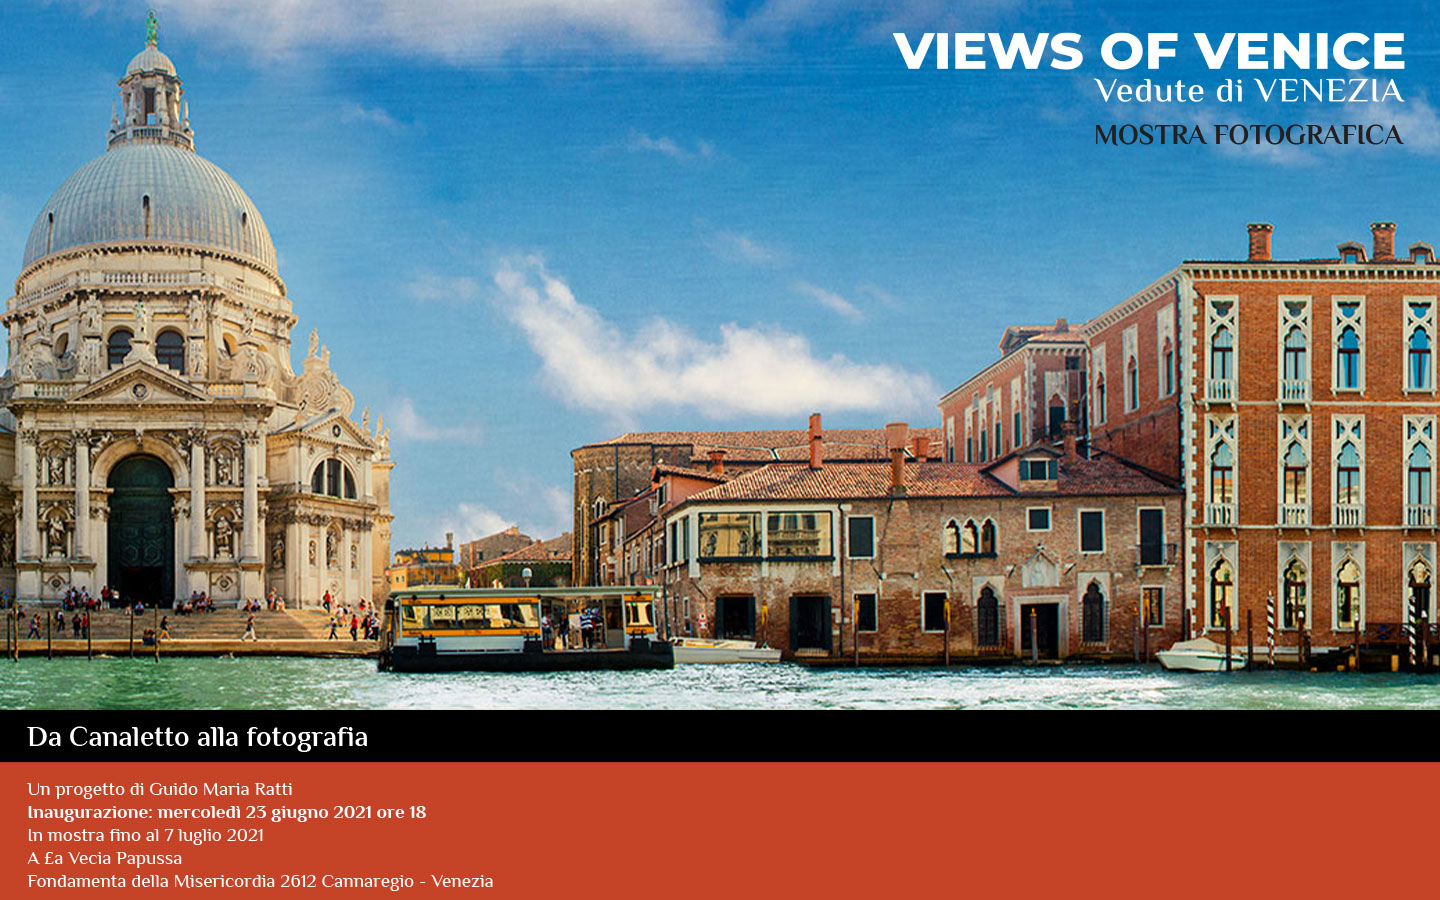 Exhibition on Venice